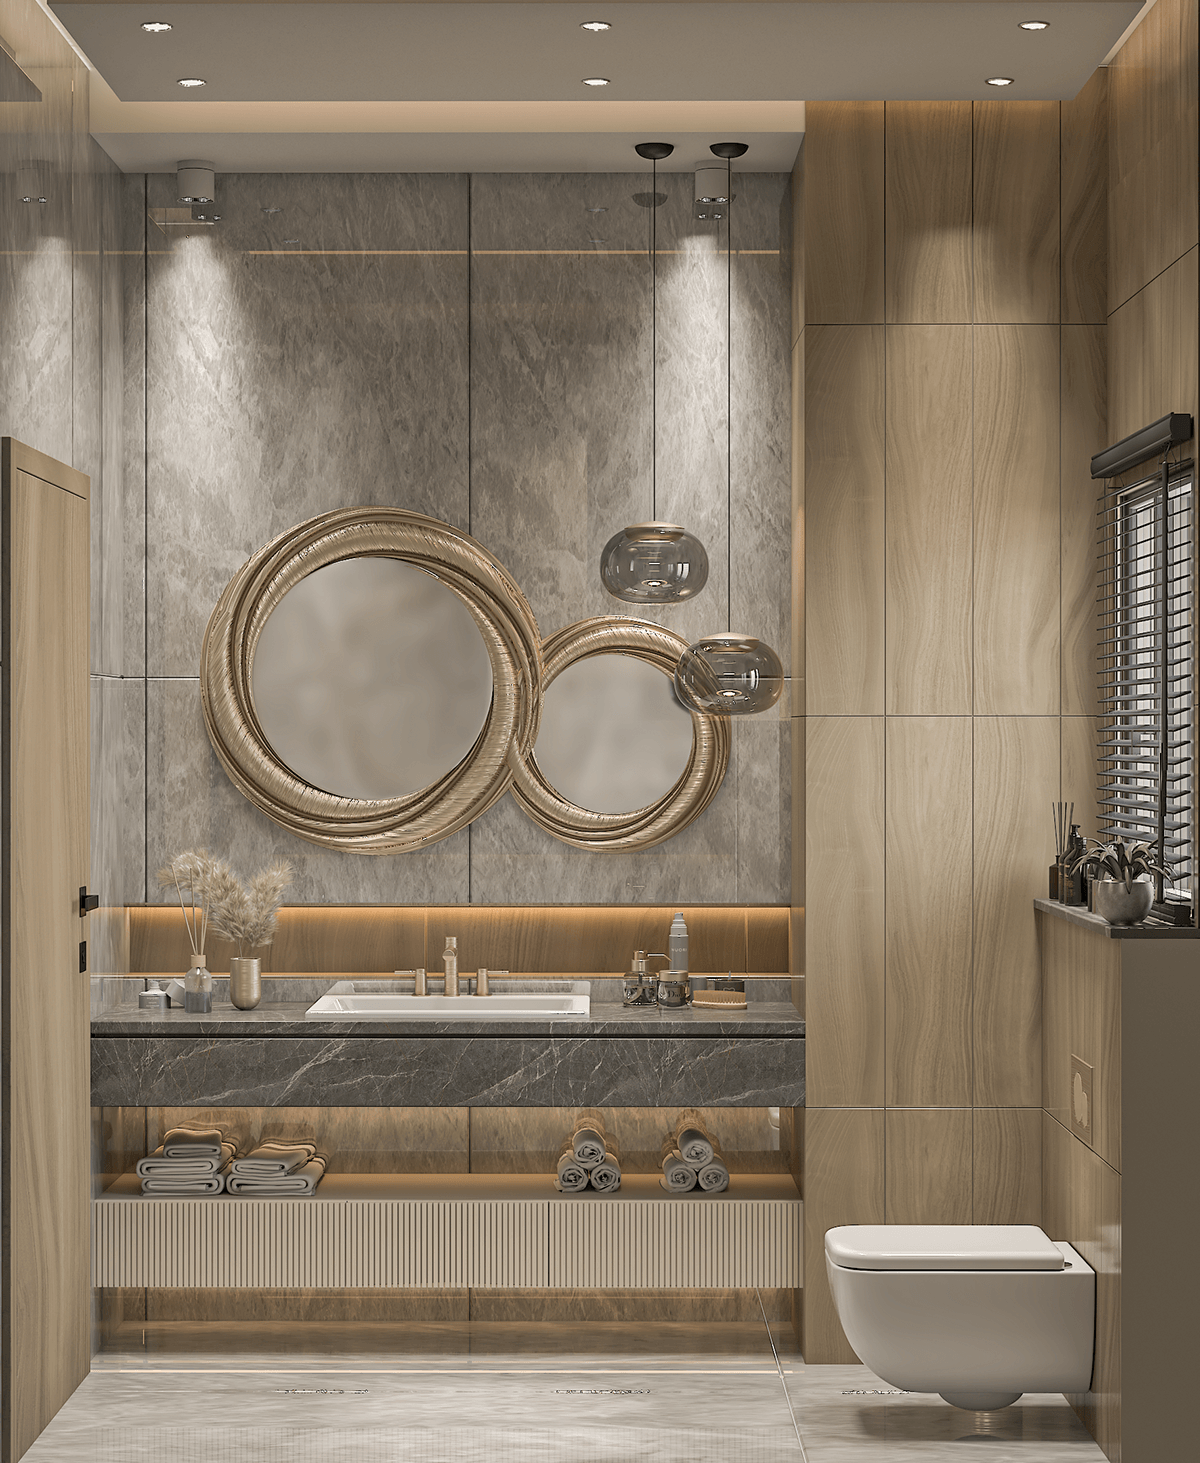 Toilet Design bathroom interior architecture modern Render vray 3ds max interior design  Guest Toilet bathroom